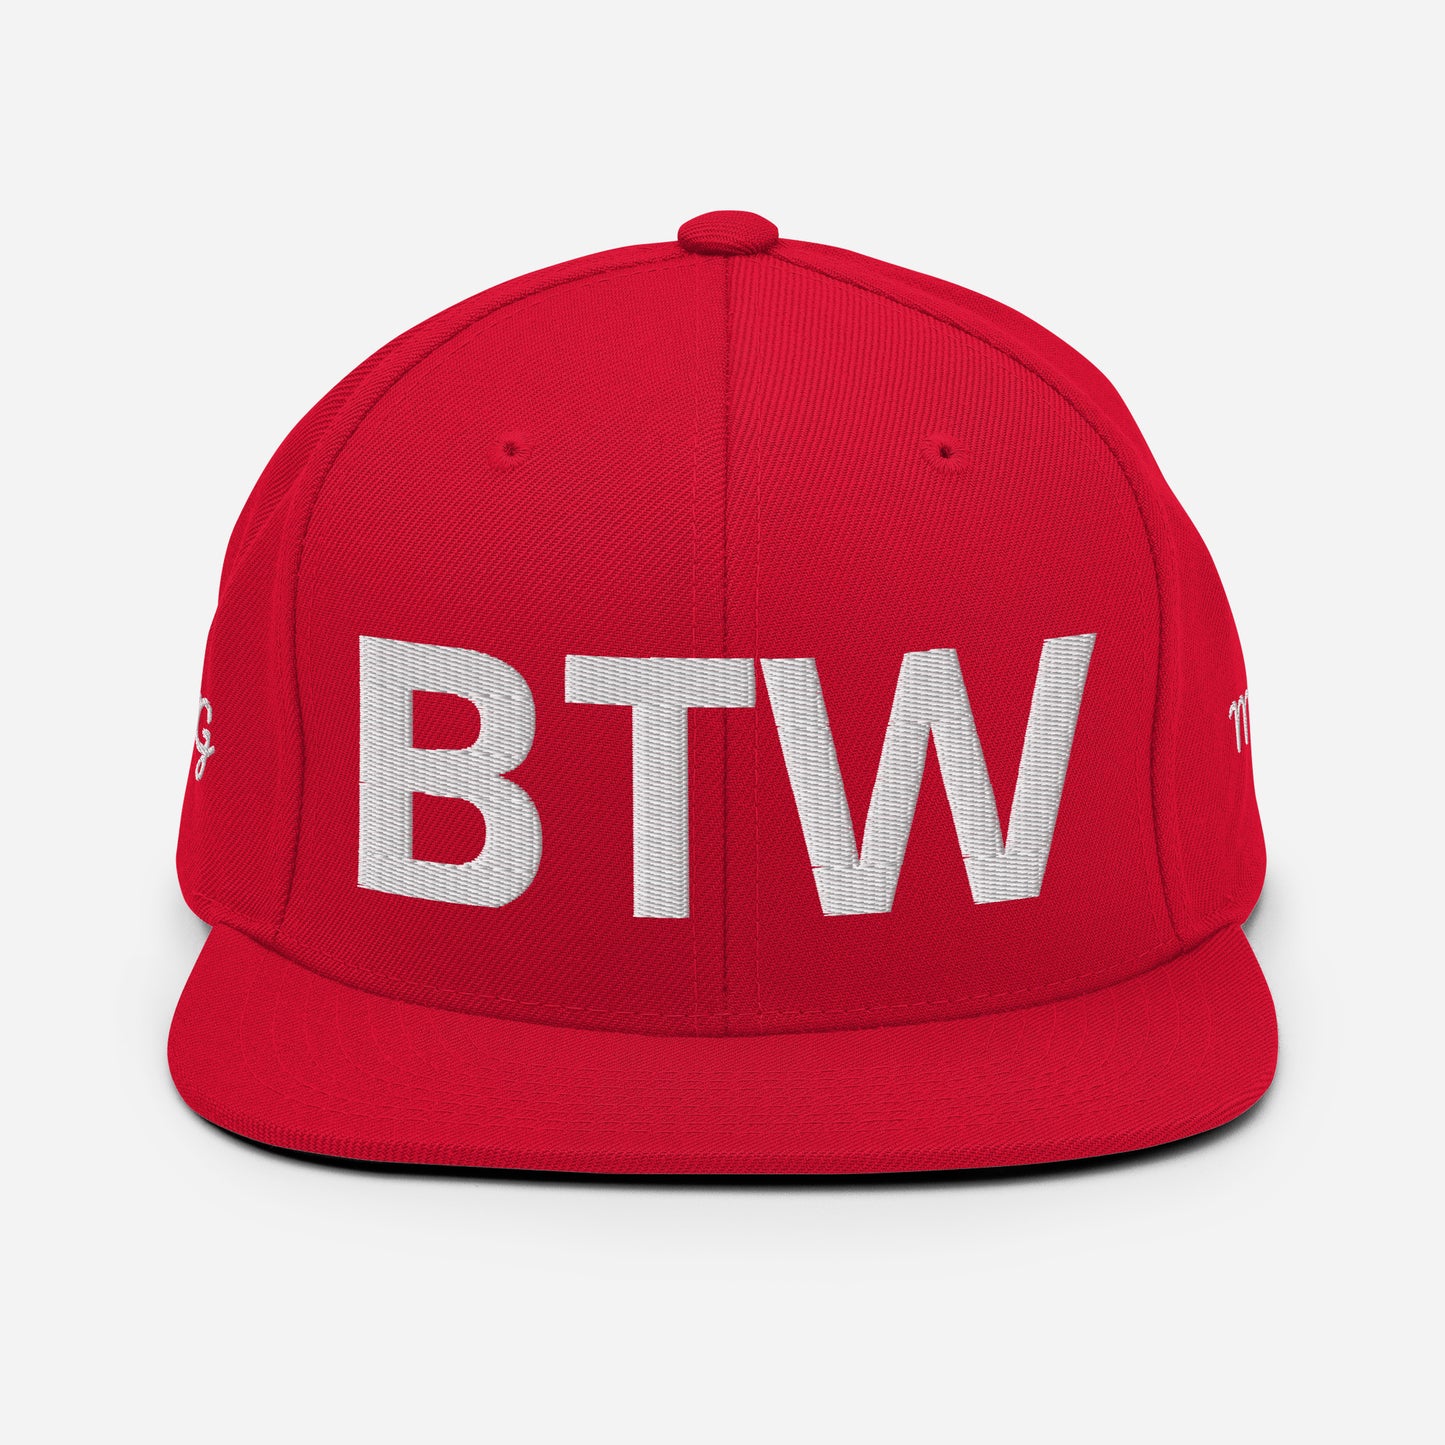 BTW Snapback Hat